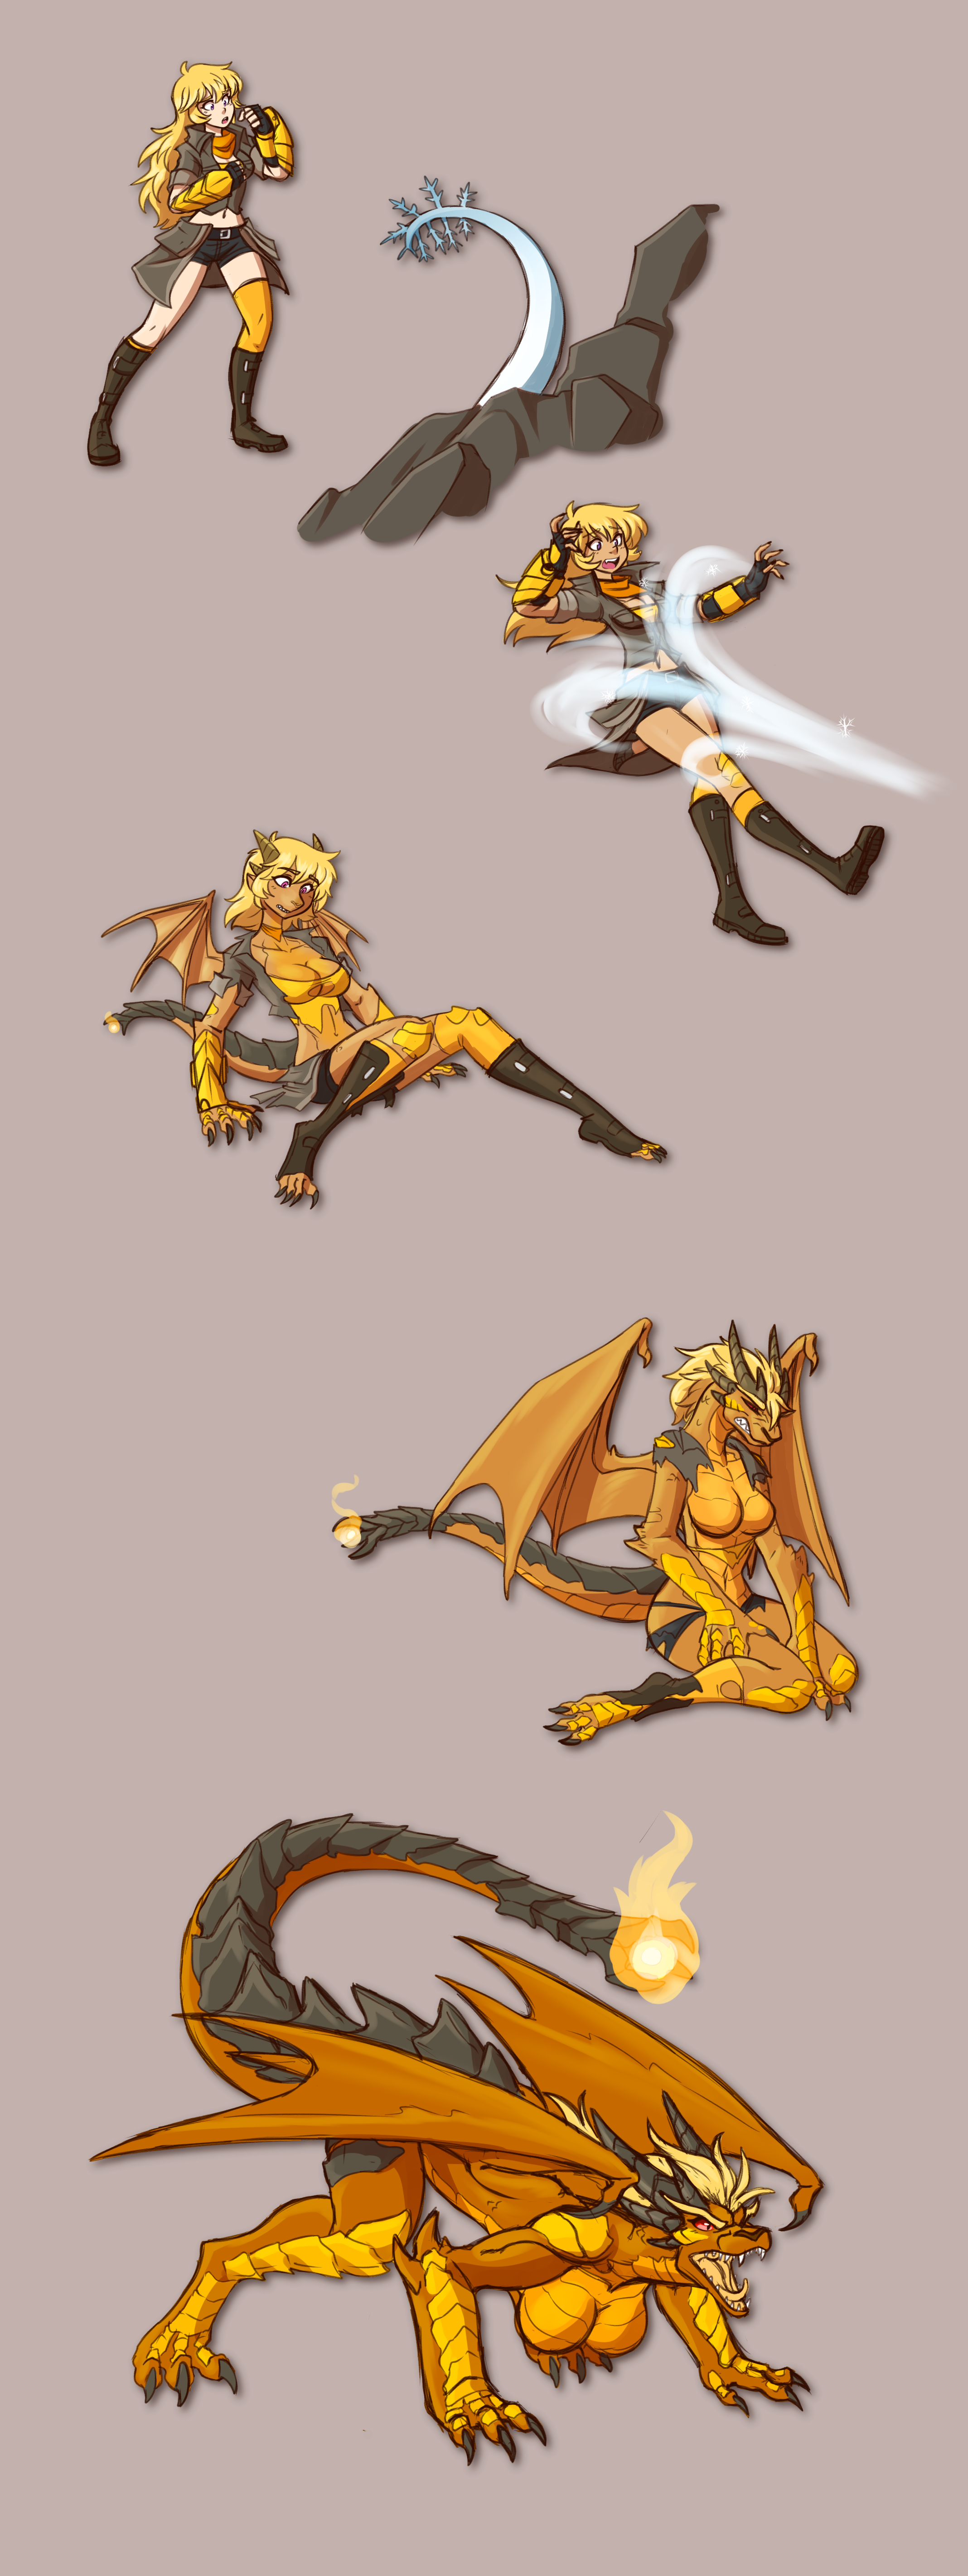 dragon girl transformation